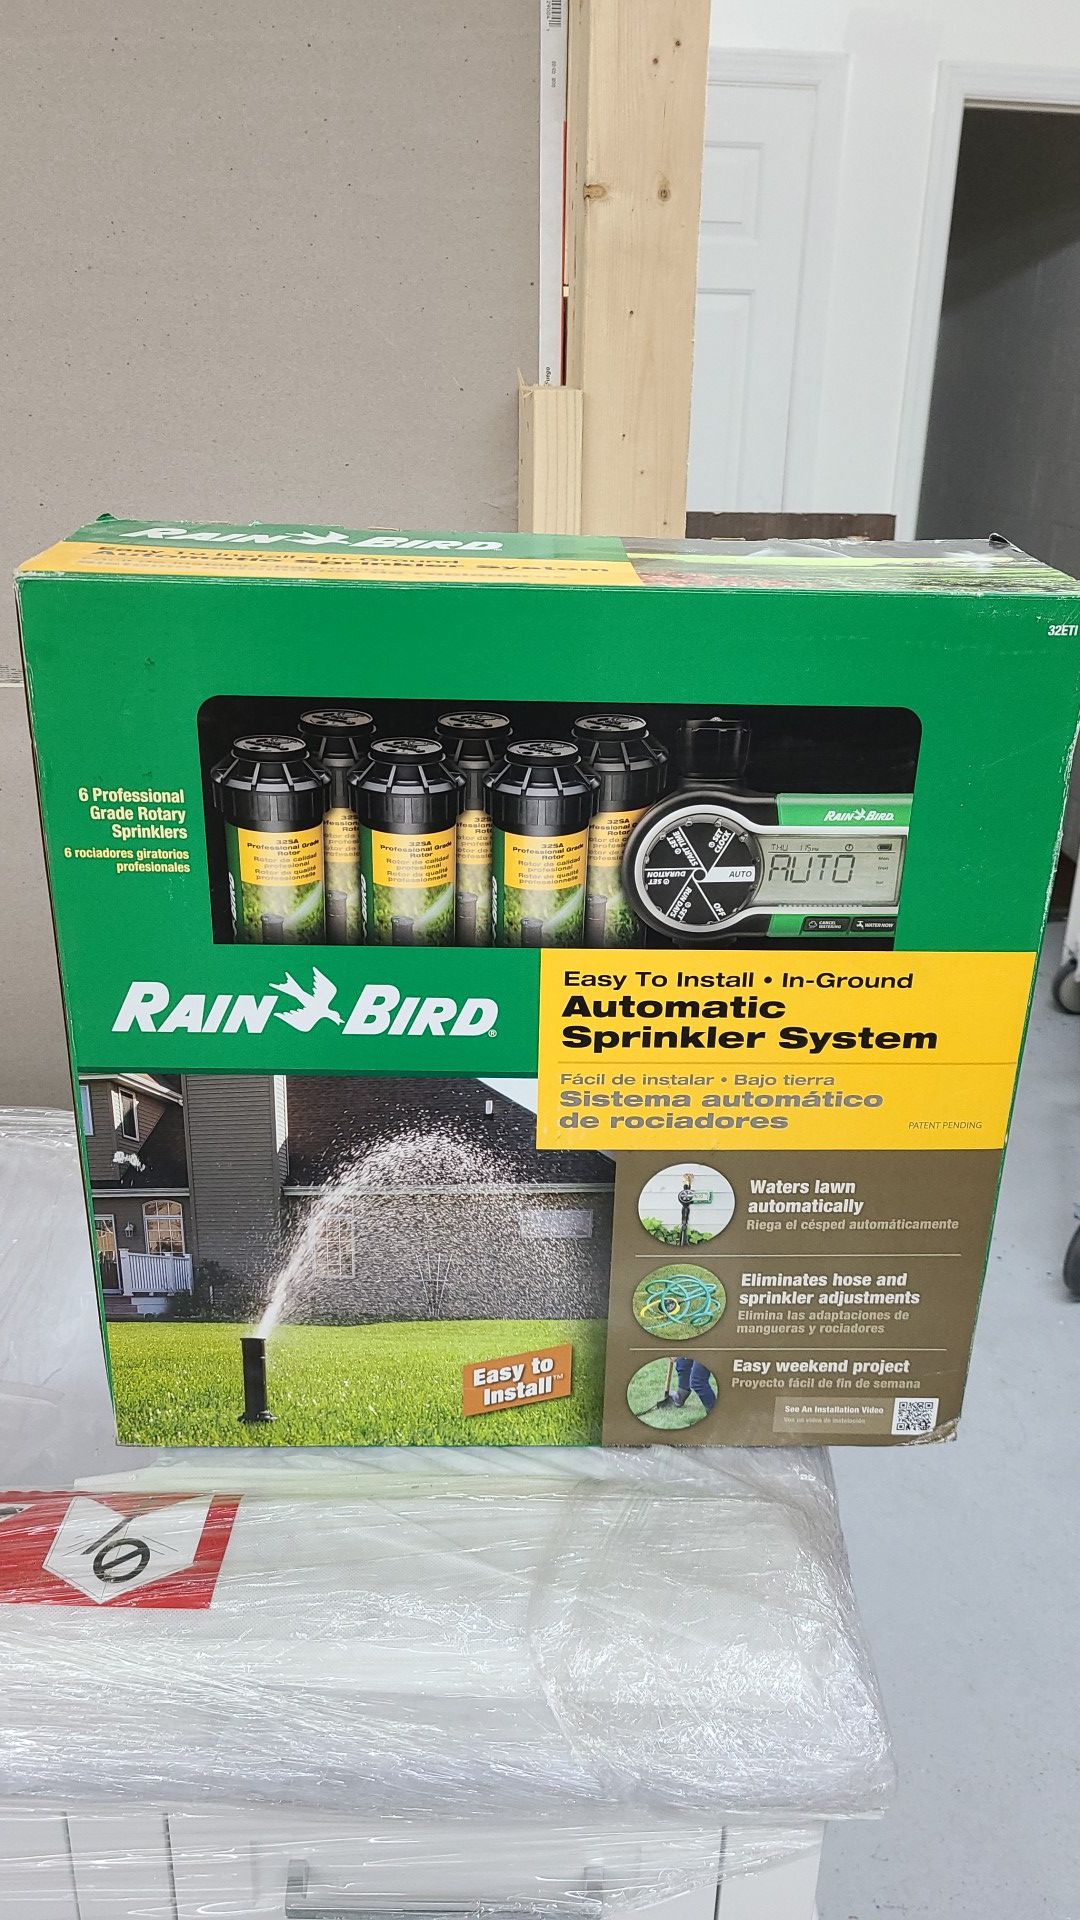 Rain bird automatic sprinkler system